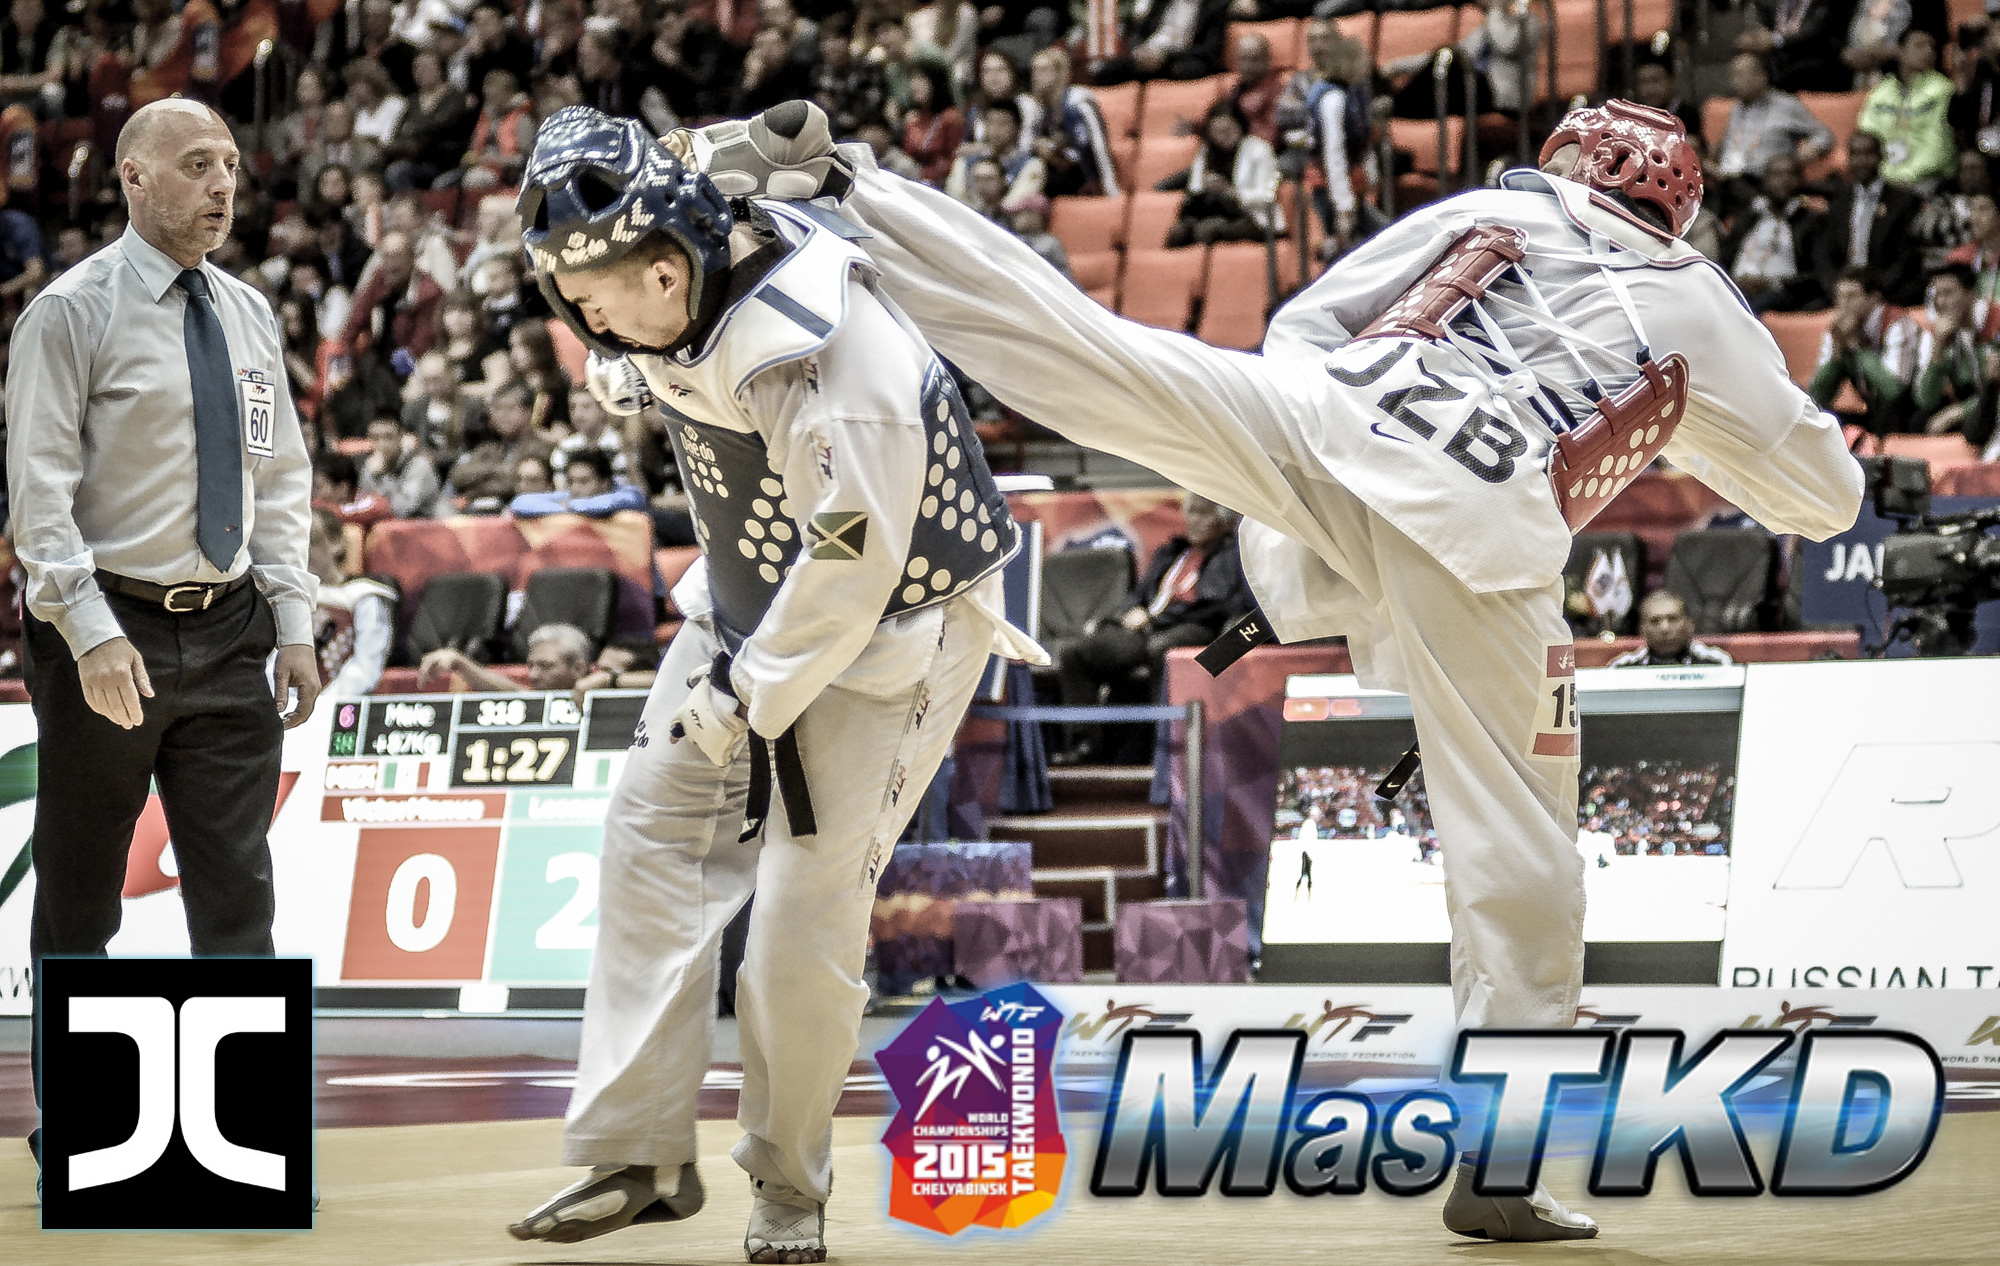 03_JCalicu-Mejores-imagenes-del-Mundial-de-Taekwondo_d5